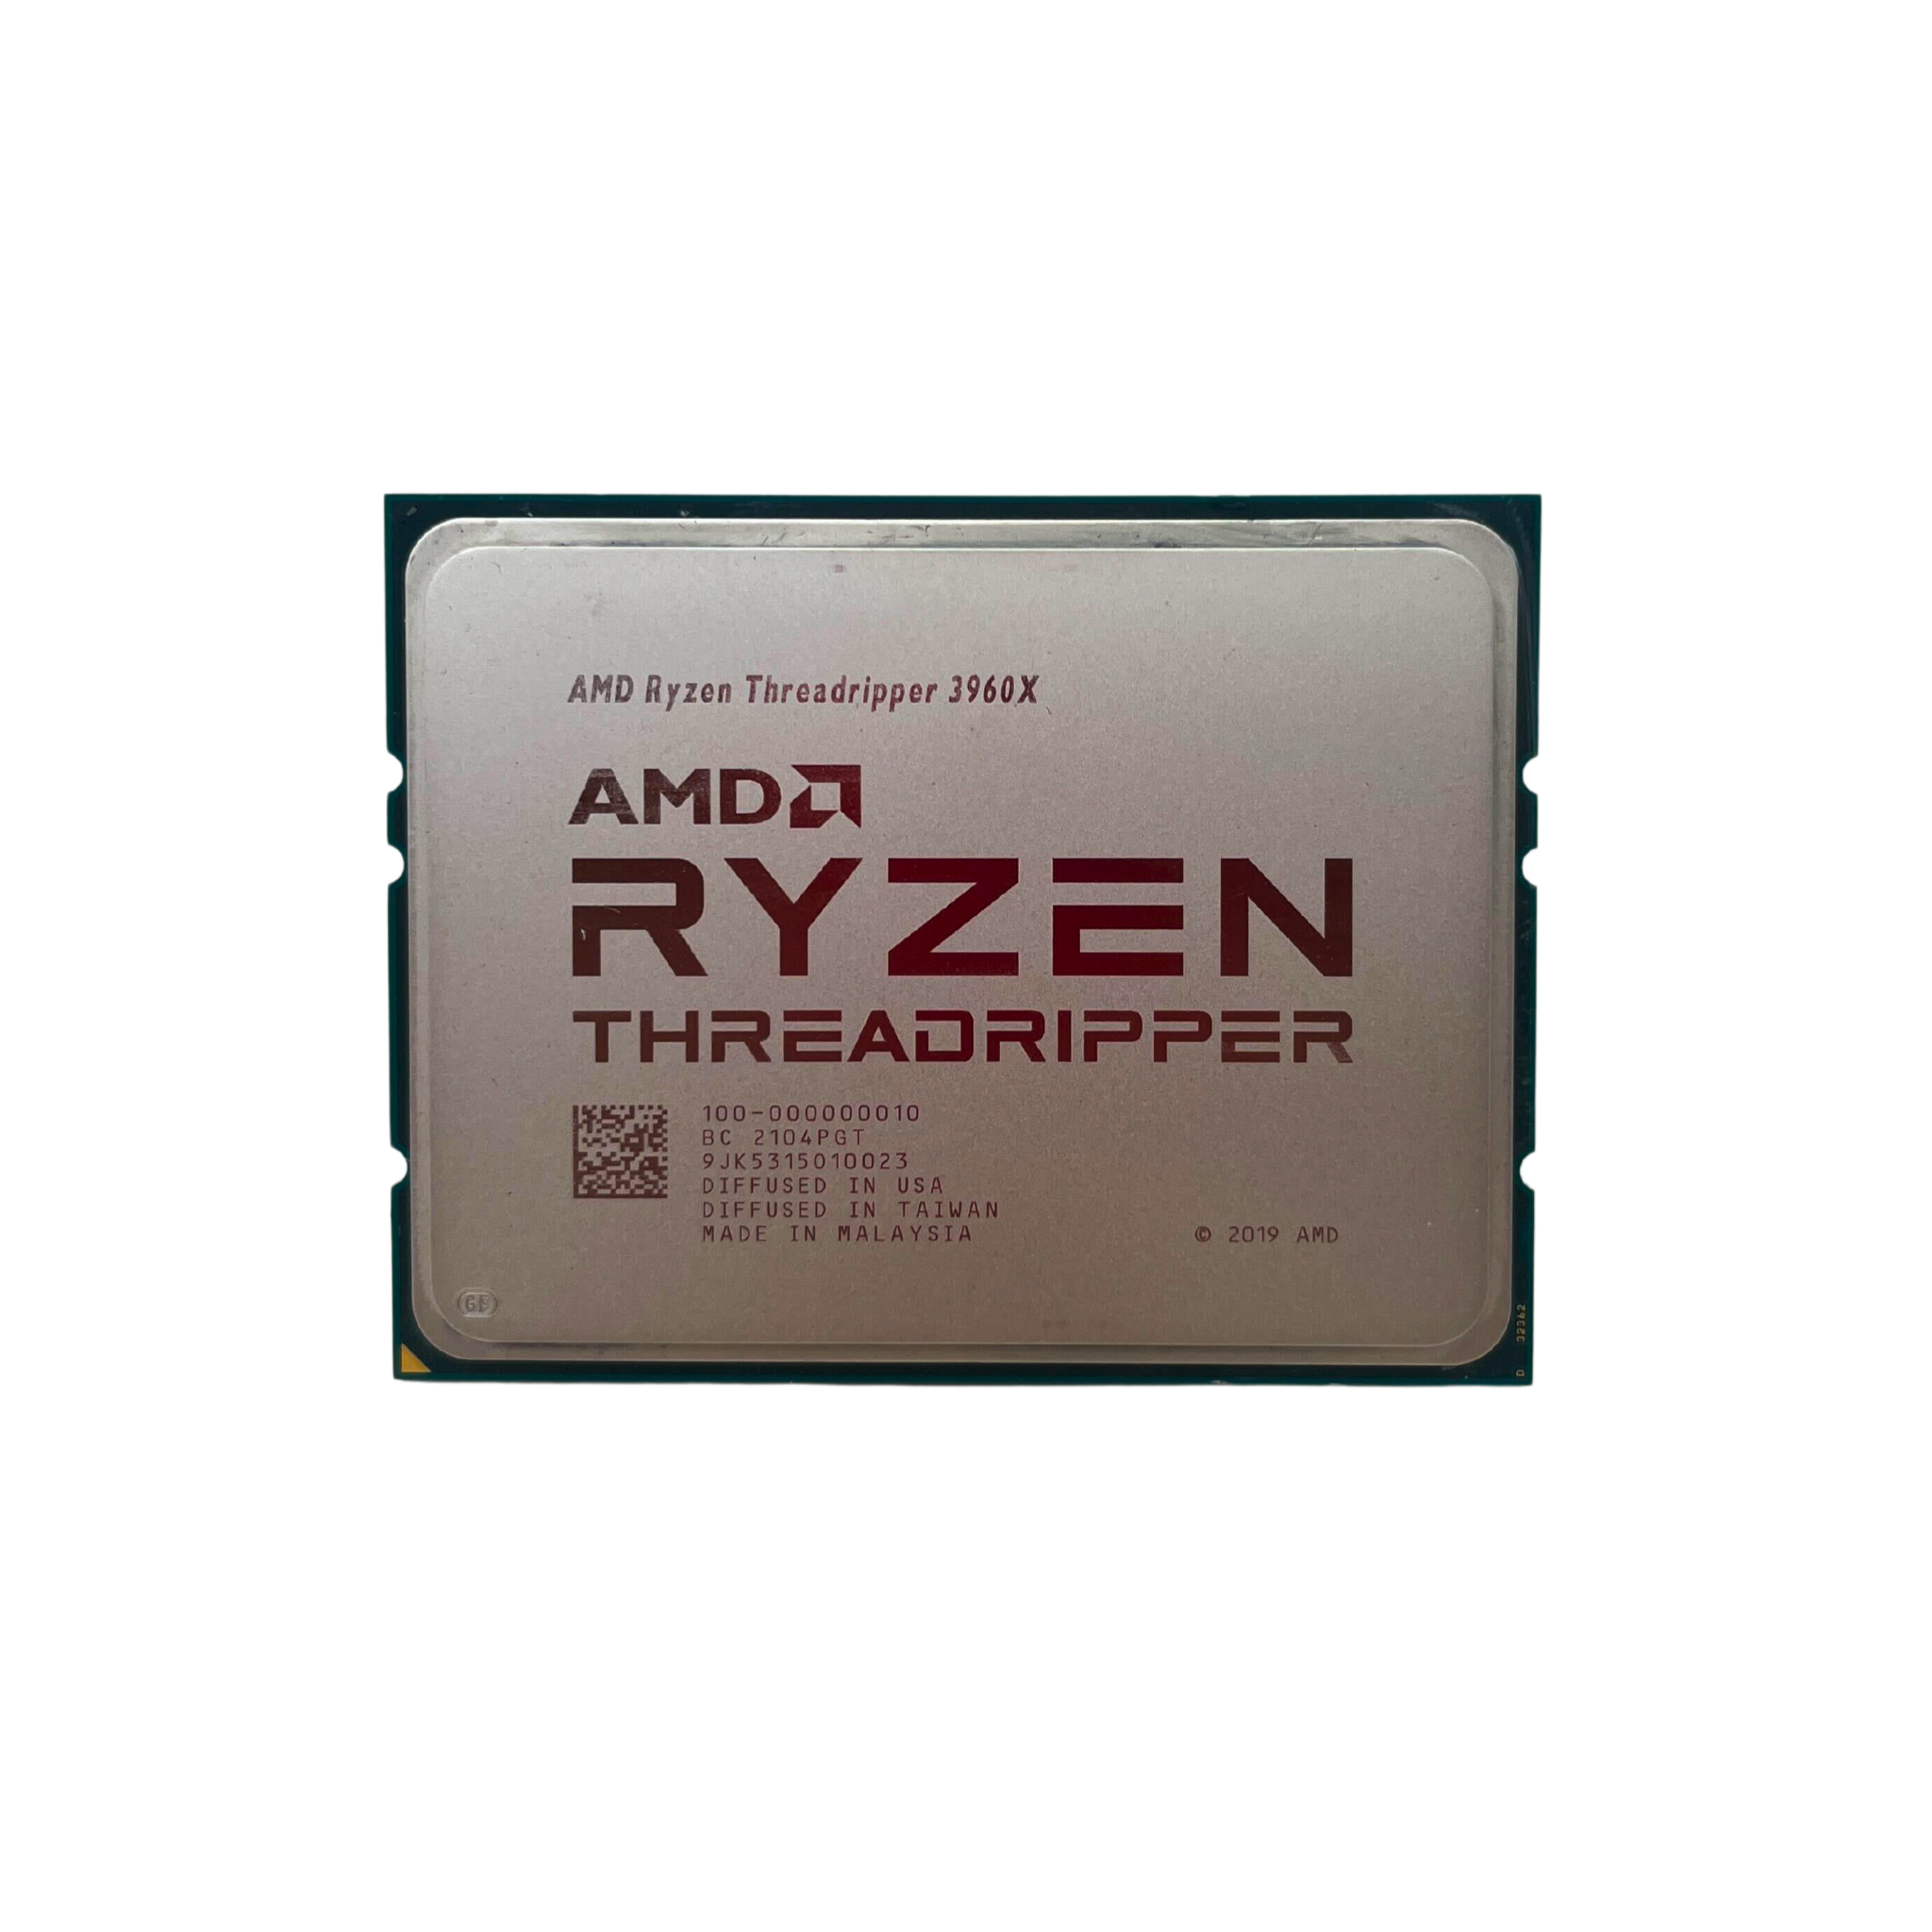 AMD Ryzen Threadripper 24 core 3960X processors Up to 4.5/3.8 100-000000010